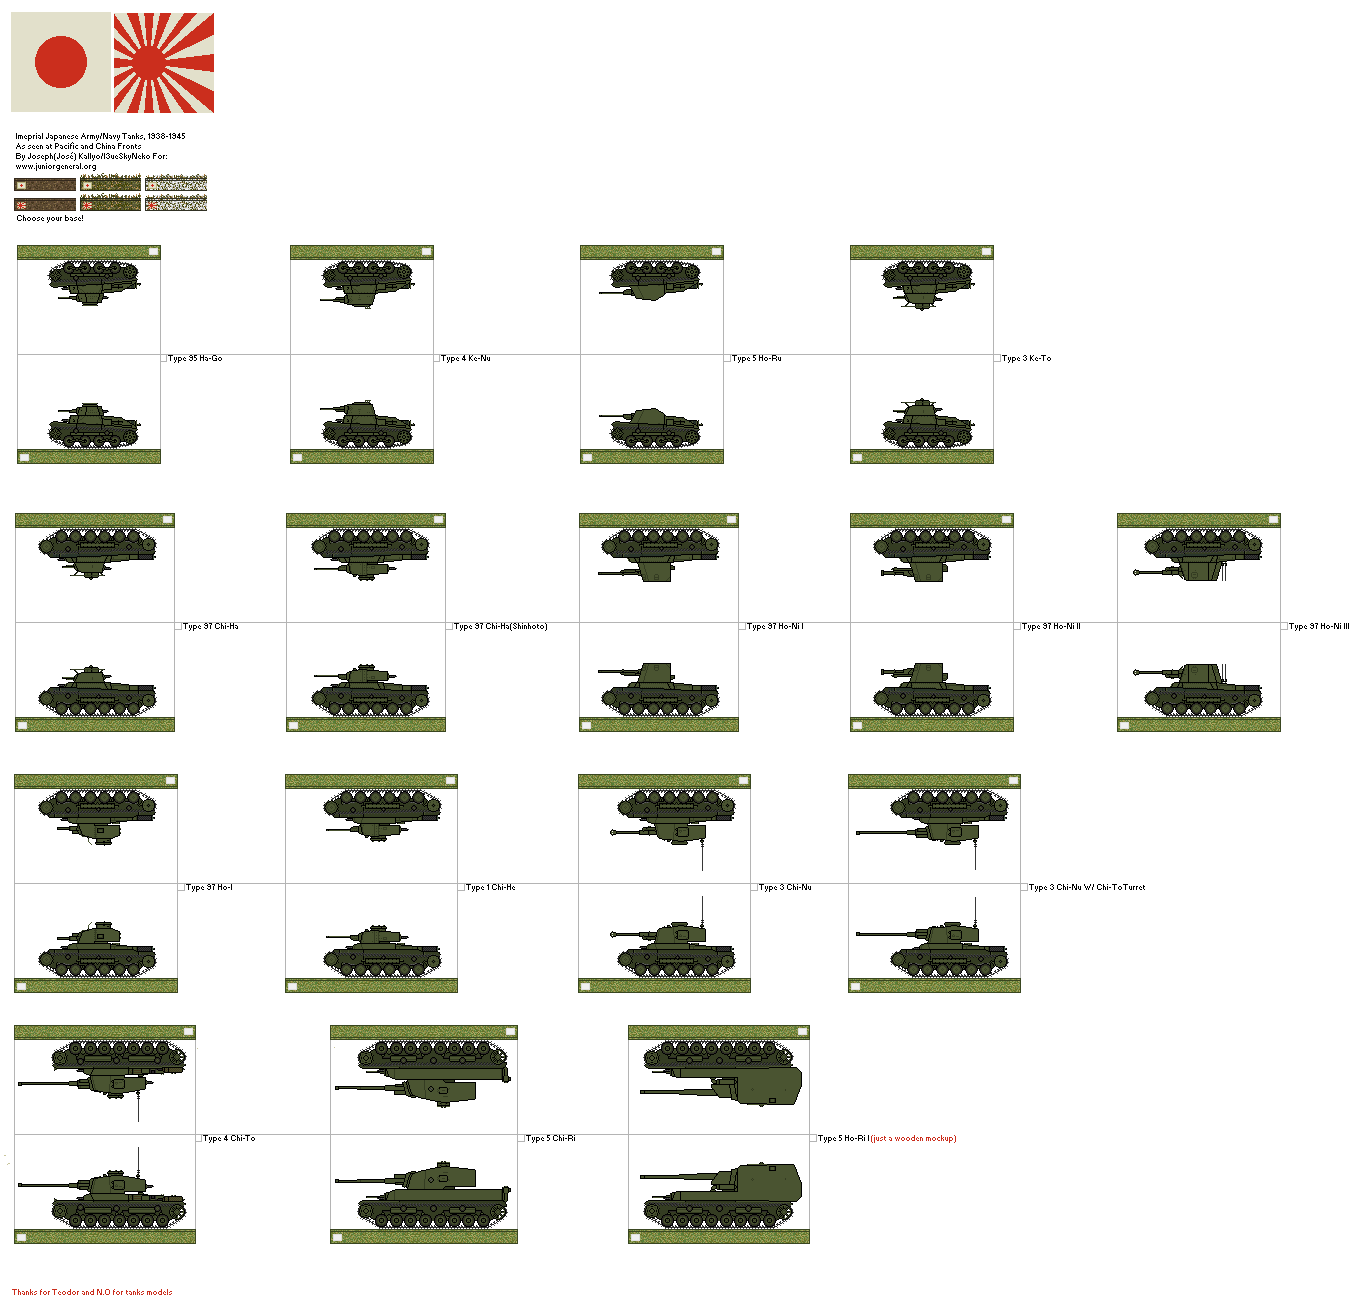 Japanese Tanks (Micro-Scale